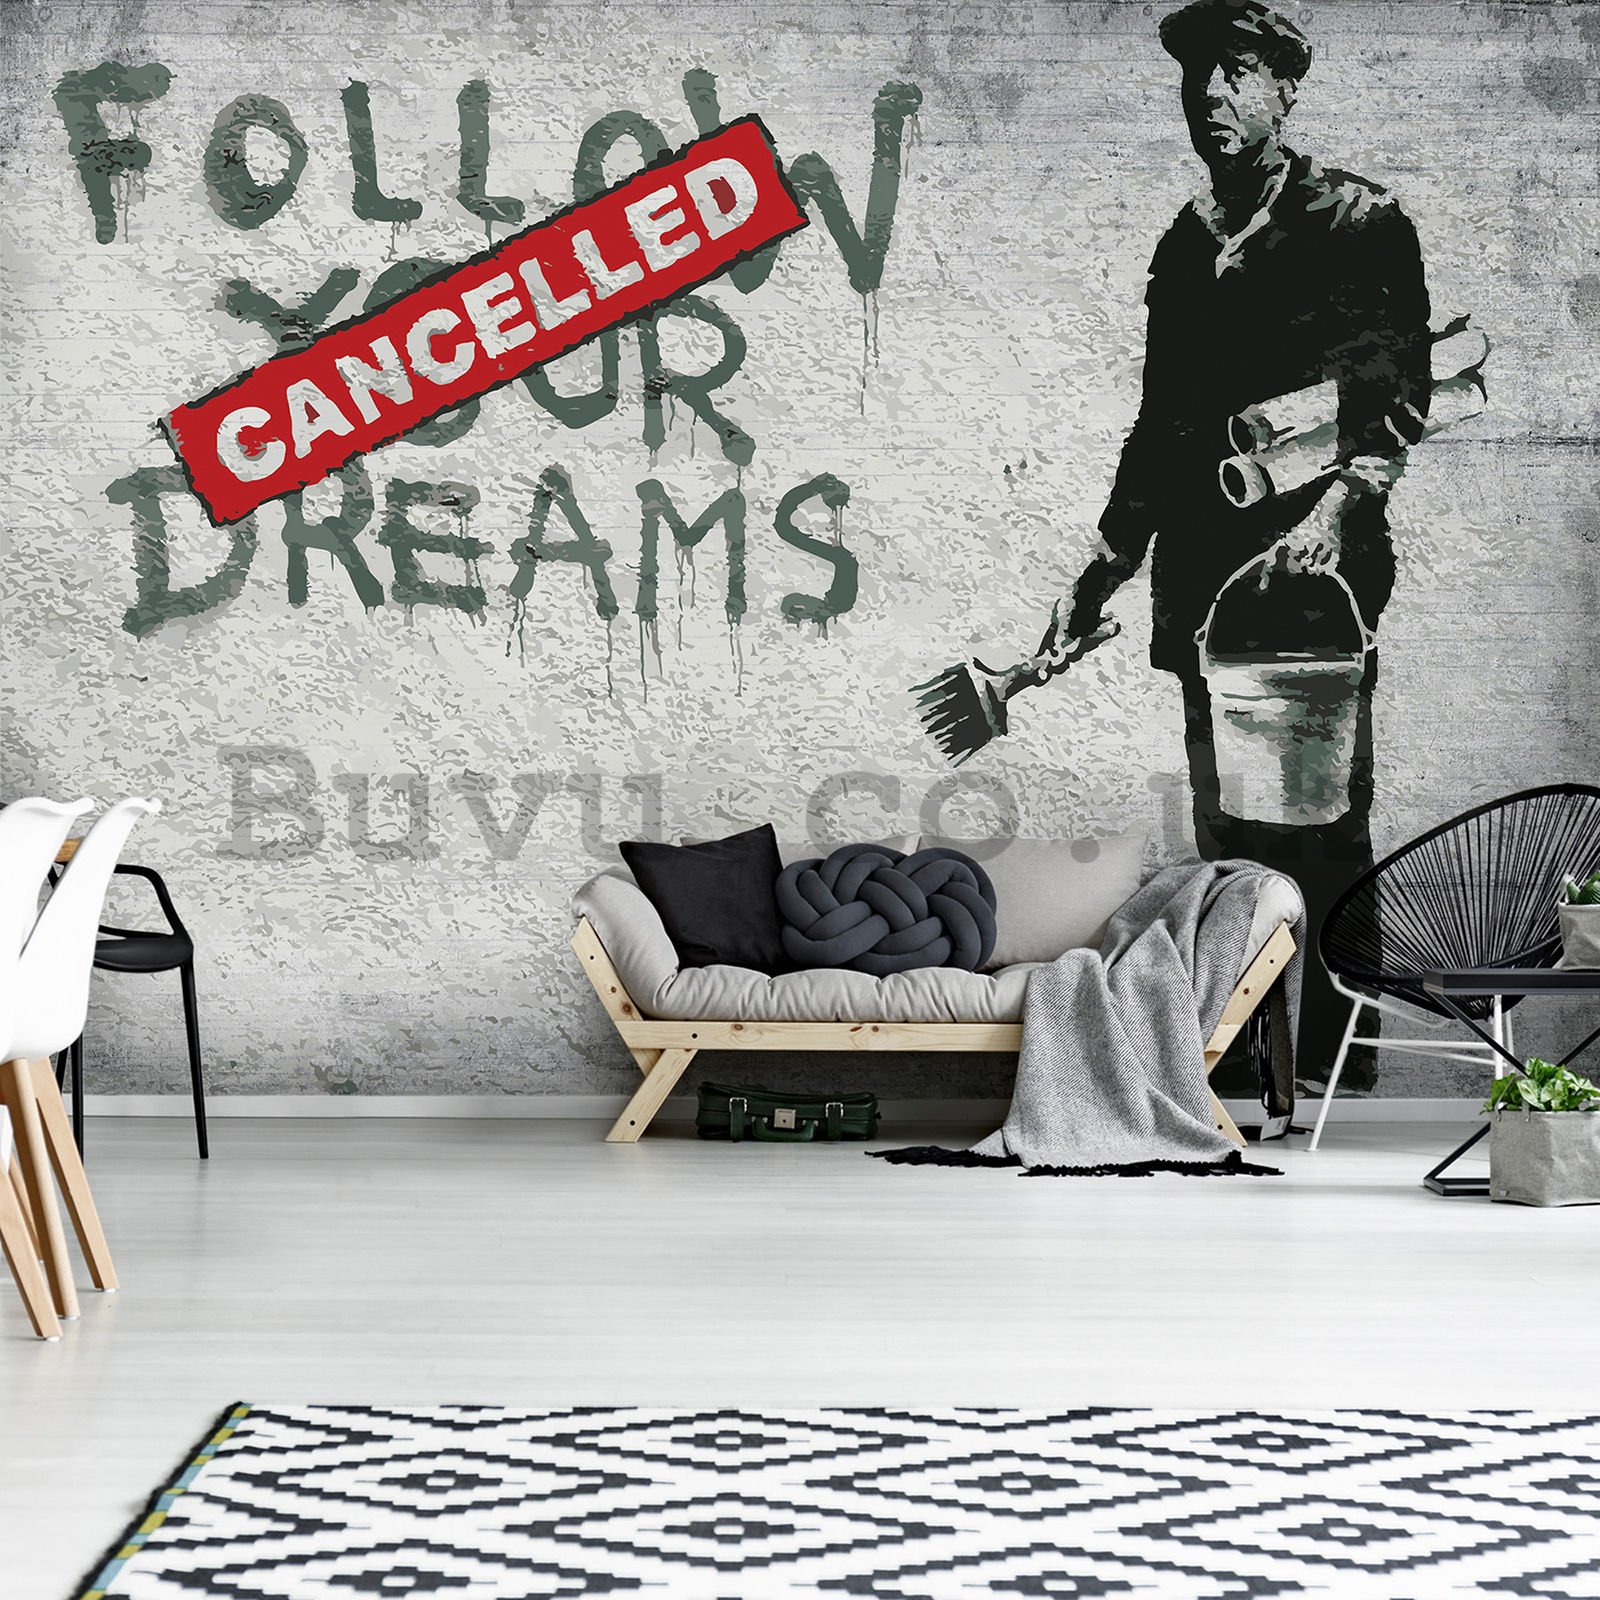 Wall mural vlies: Follow Your Dreams (Cancelled) - 416x254 cm